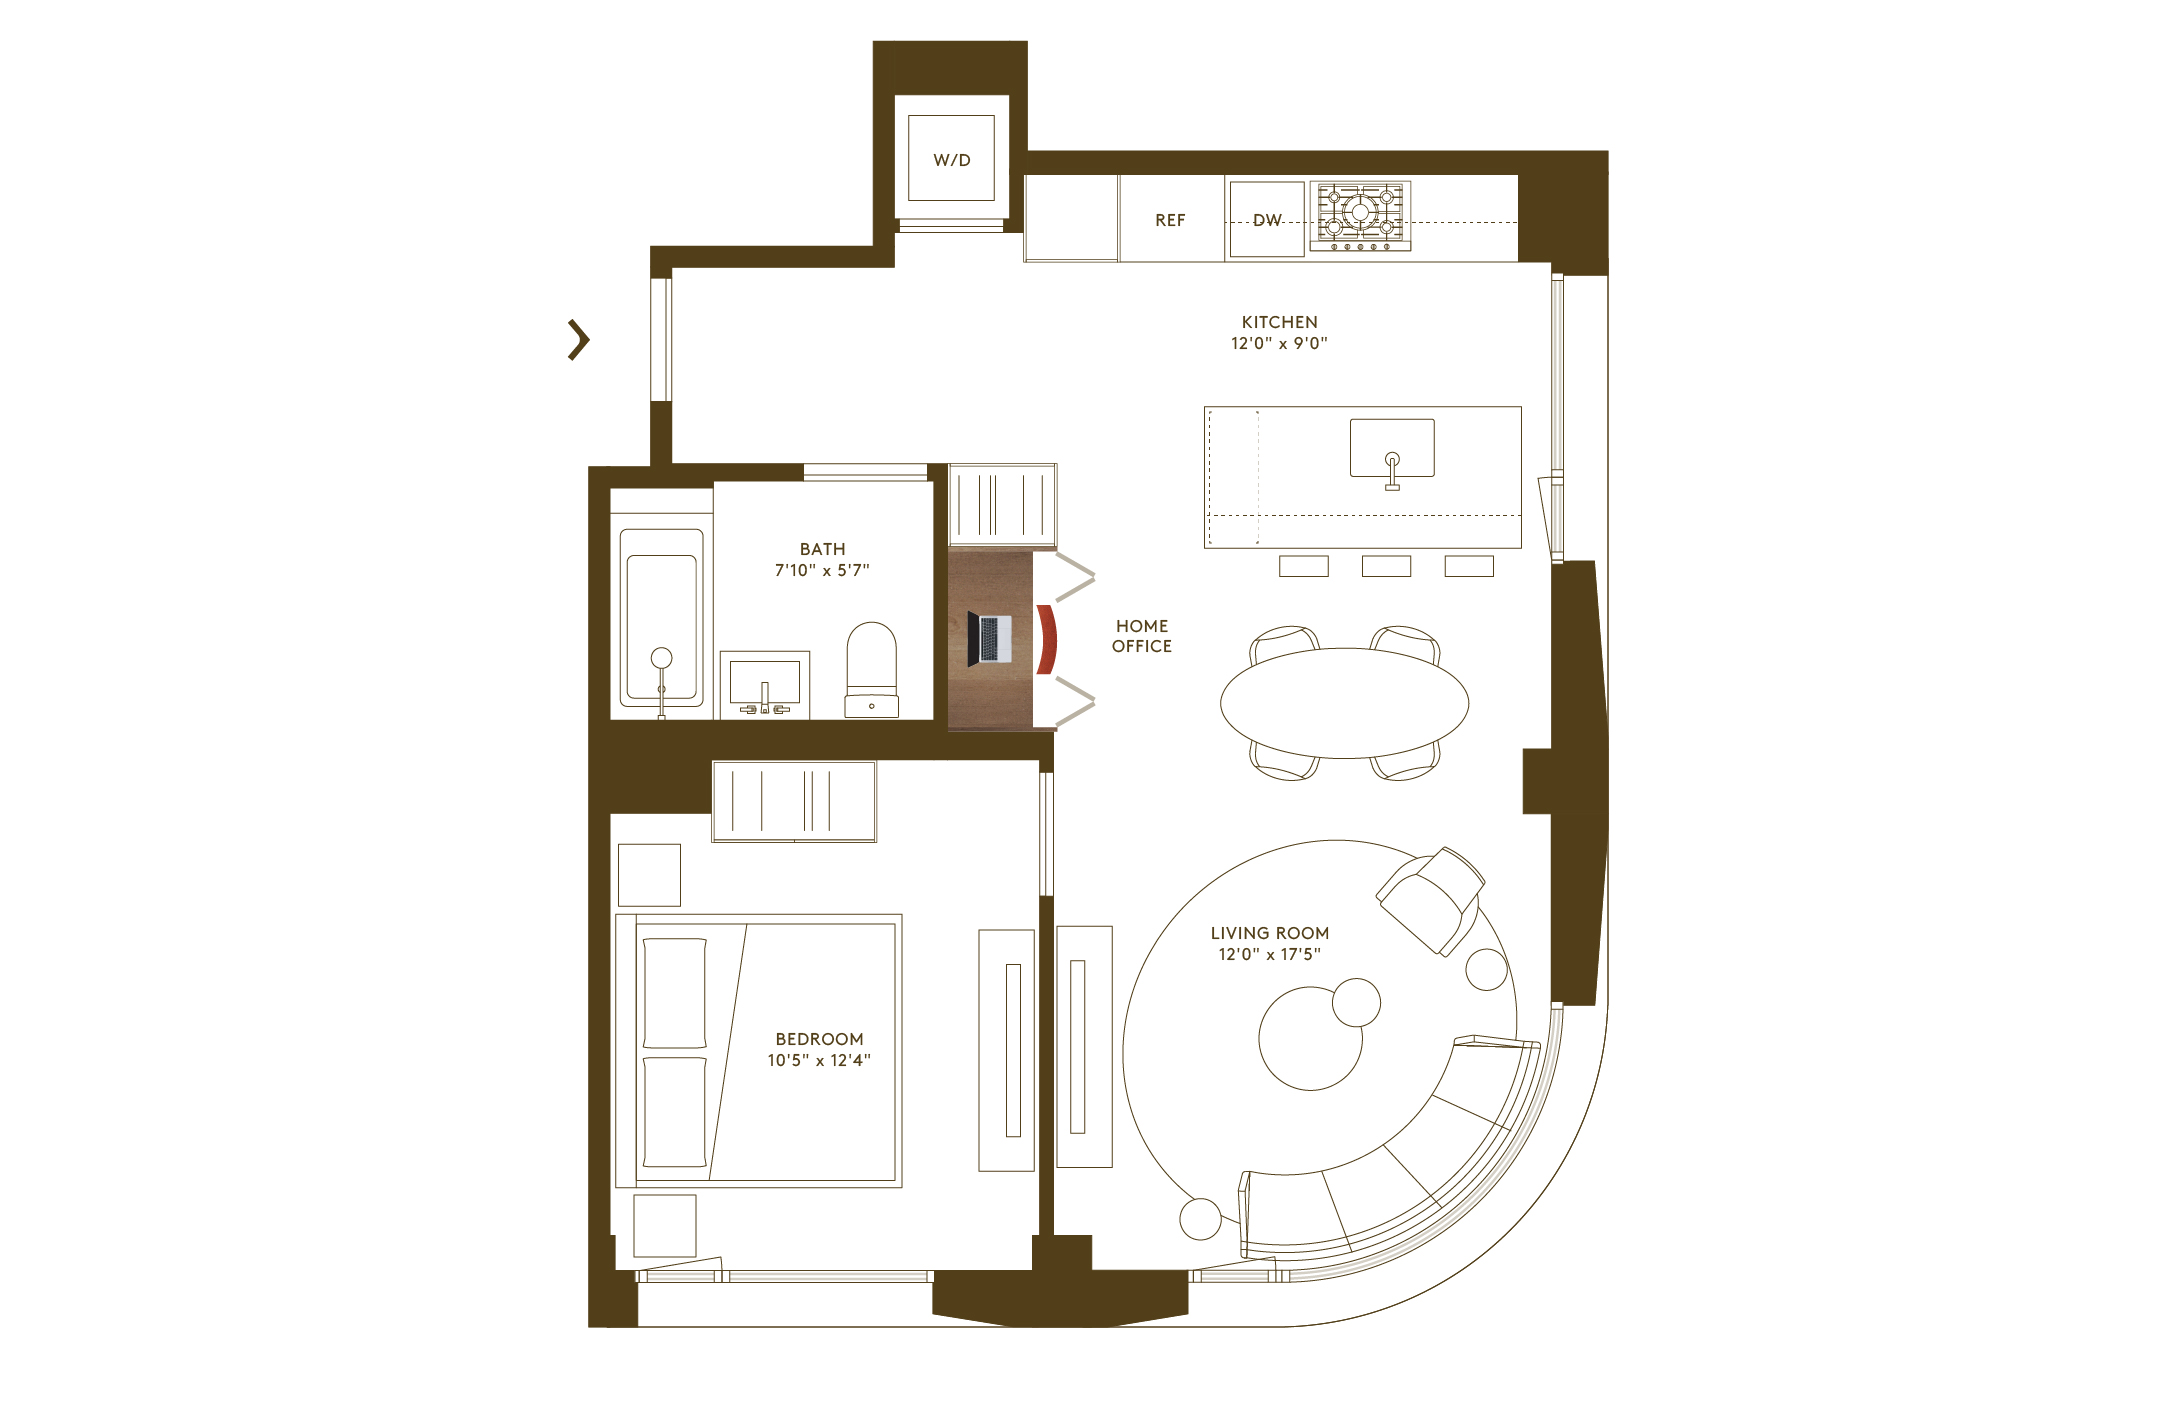 Floorplan of corner 1-bedroom condo with home office at Hendrix House condominiums in Kips Bay NYC.